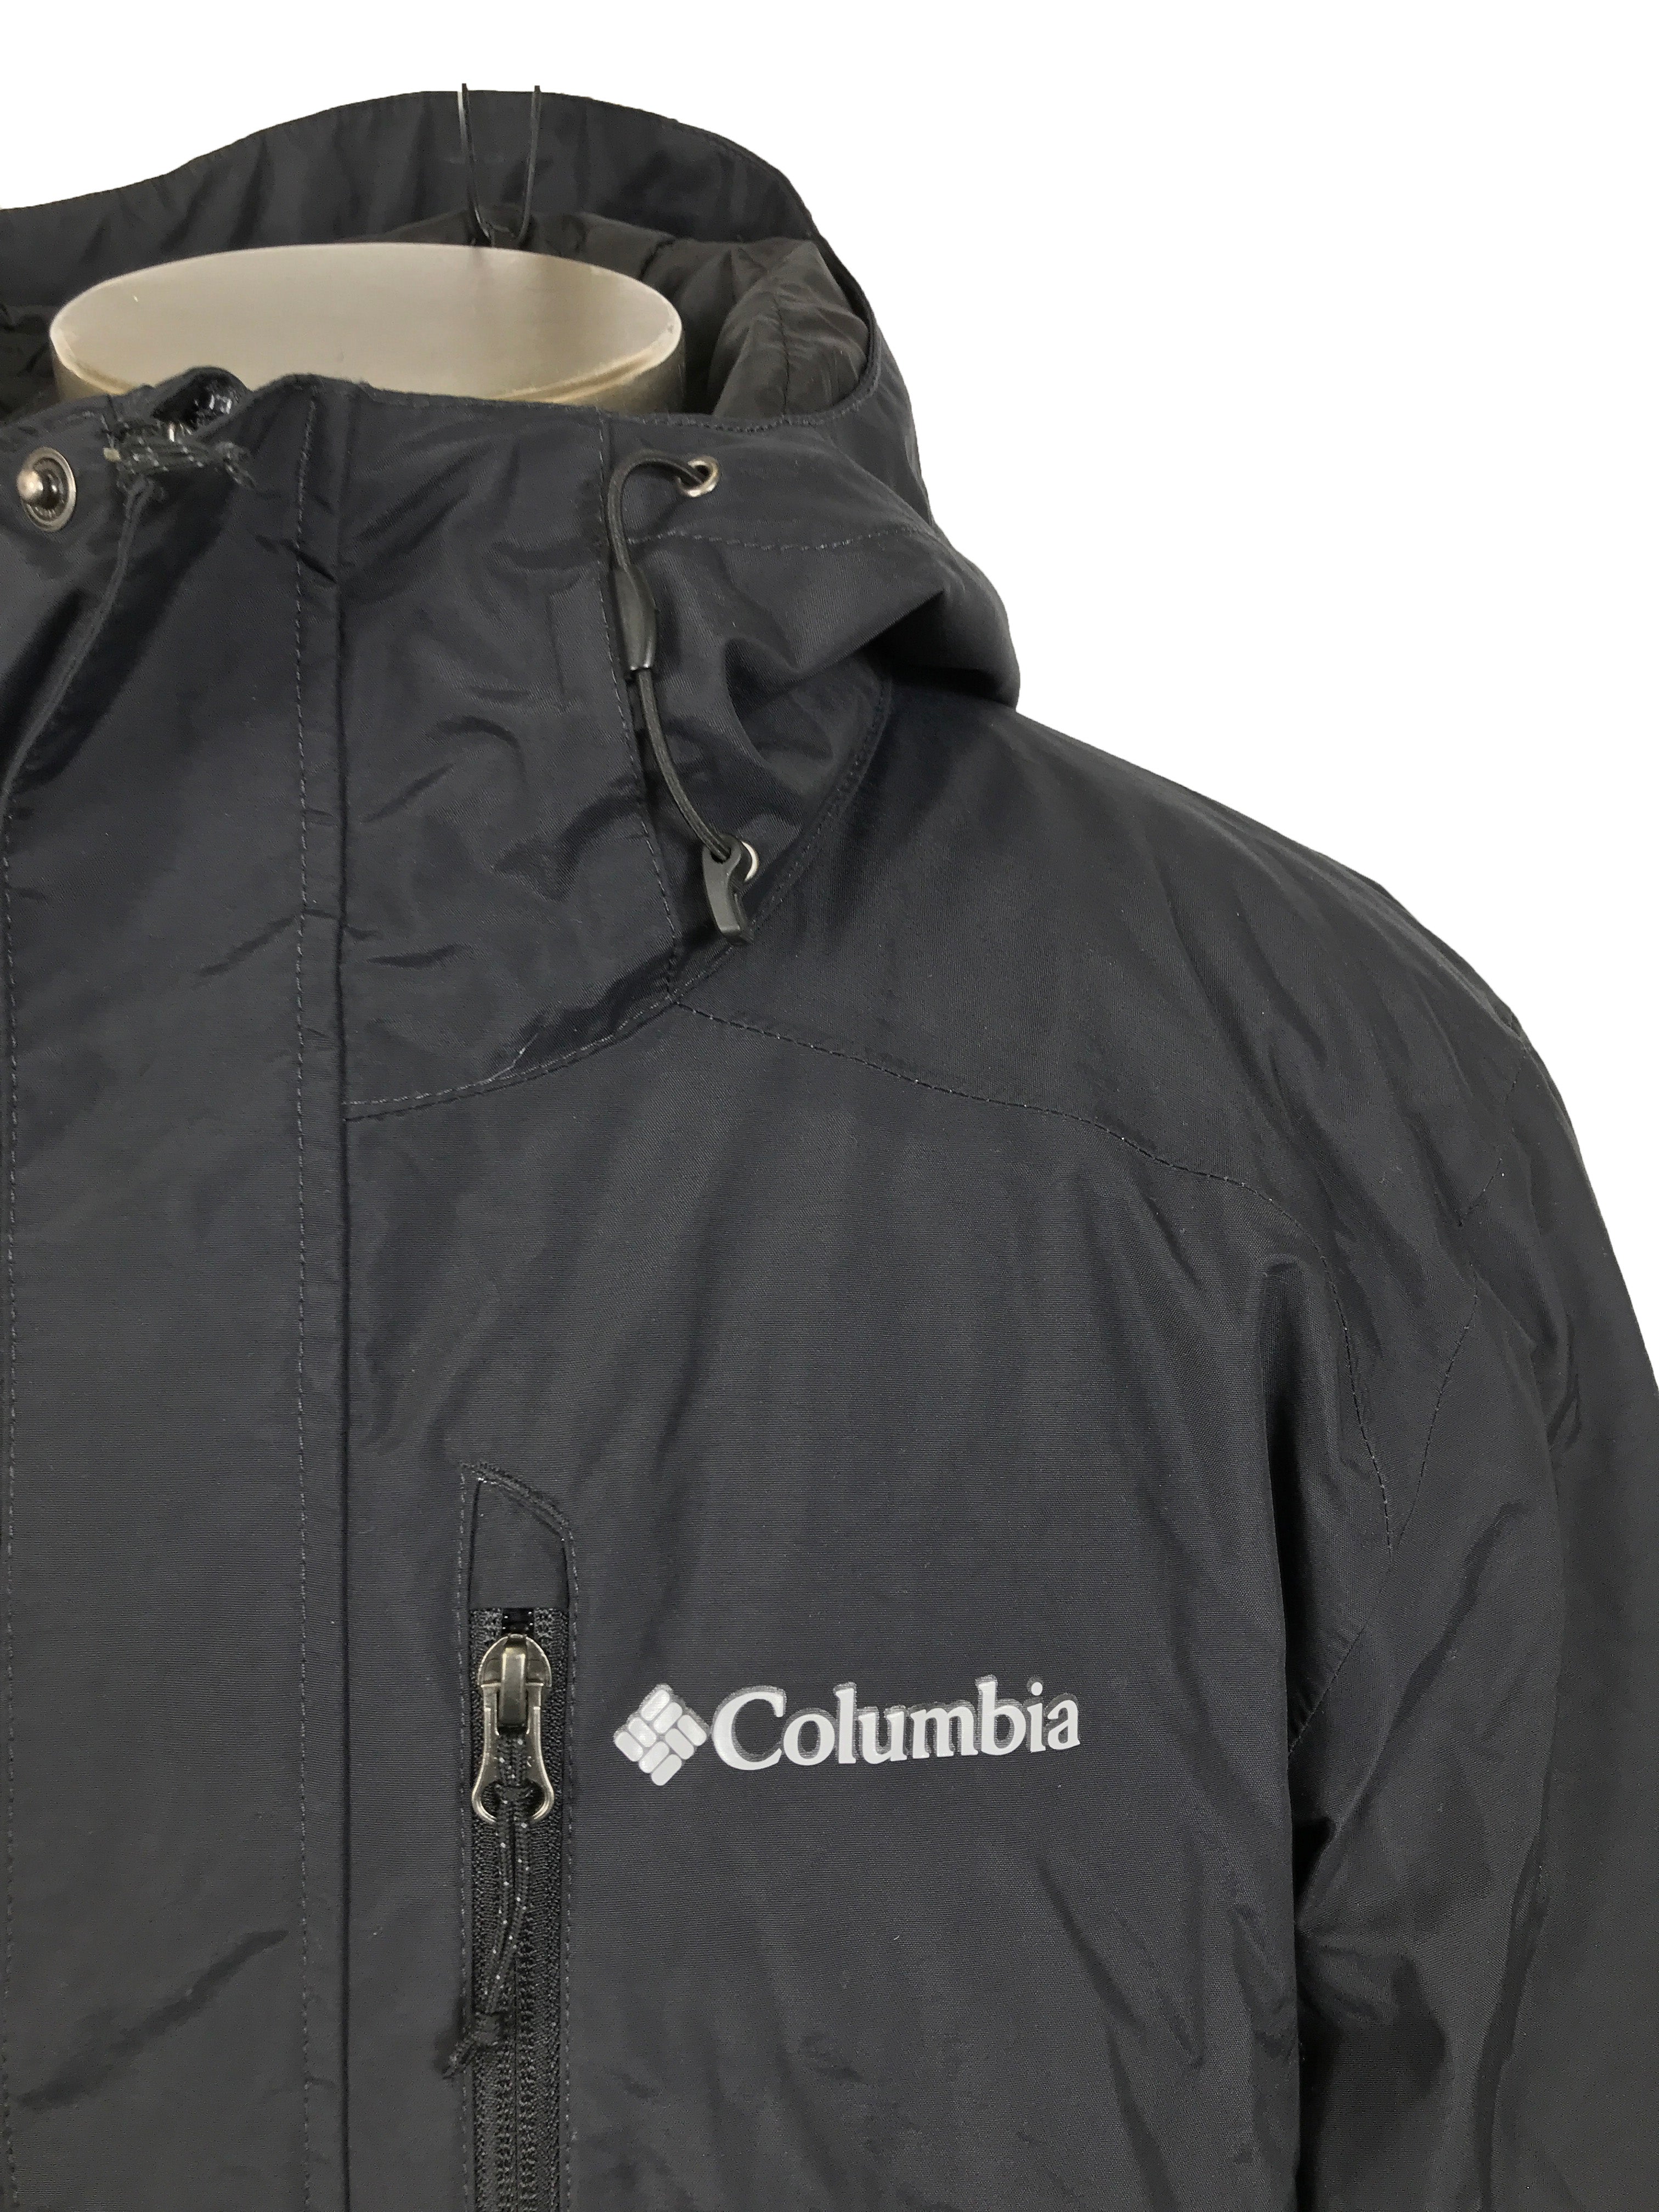 Columbia Black Coat Men's Size L